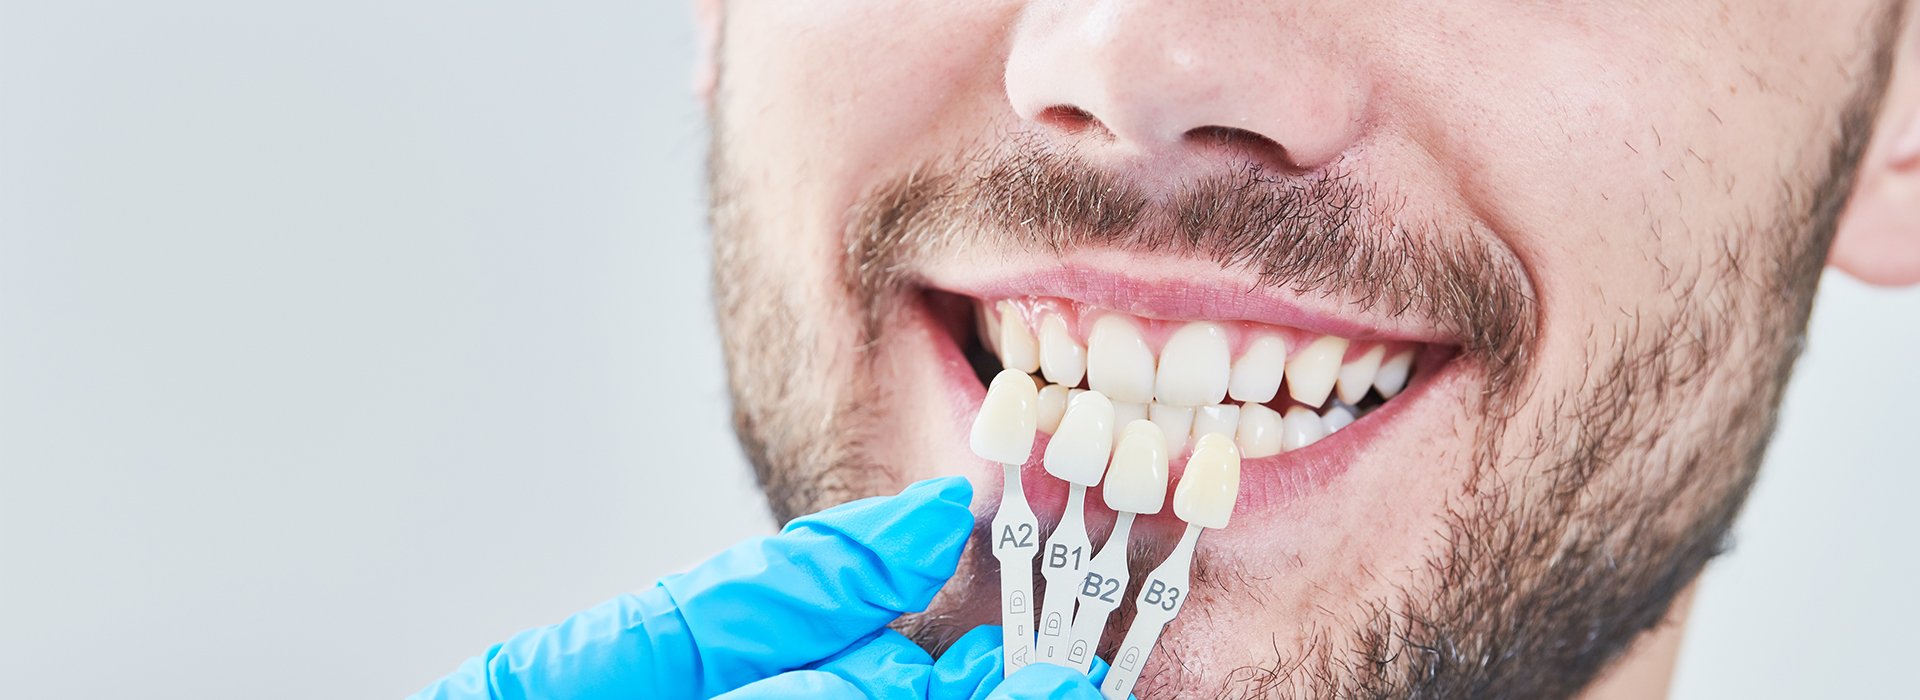 Divine Smiles Dental | TMJ Disorders, Oral Exams and Sedation Dentistry